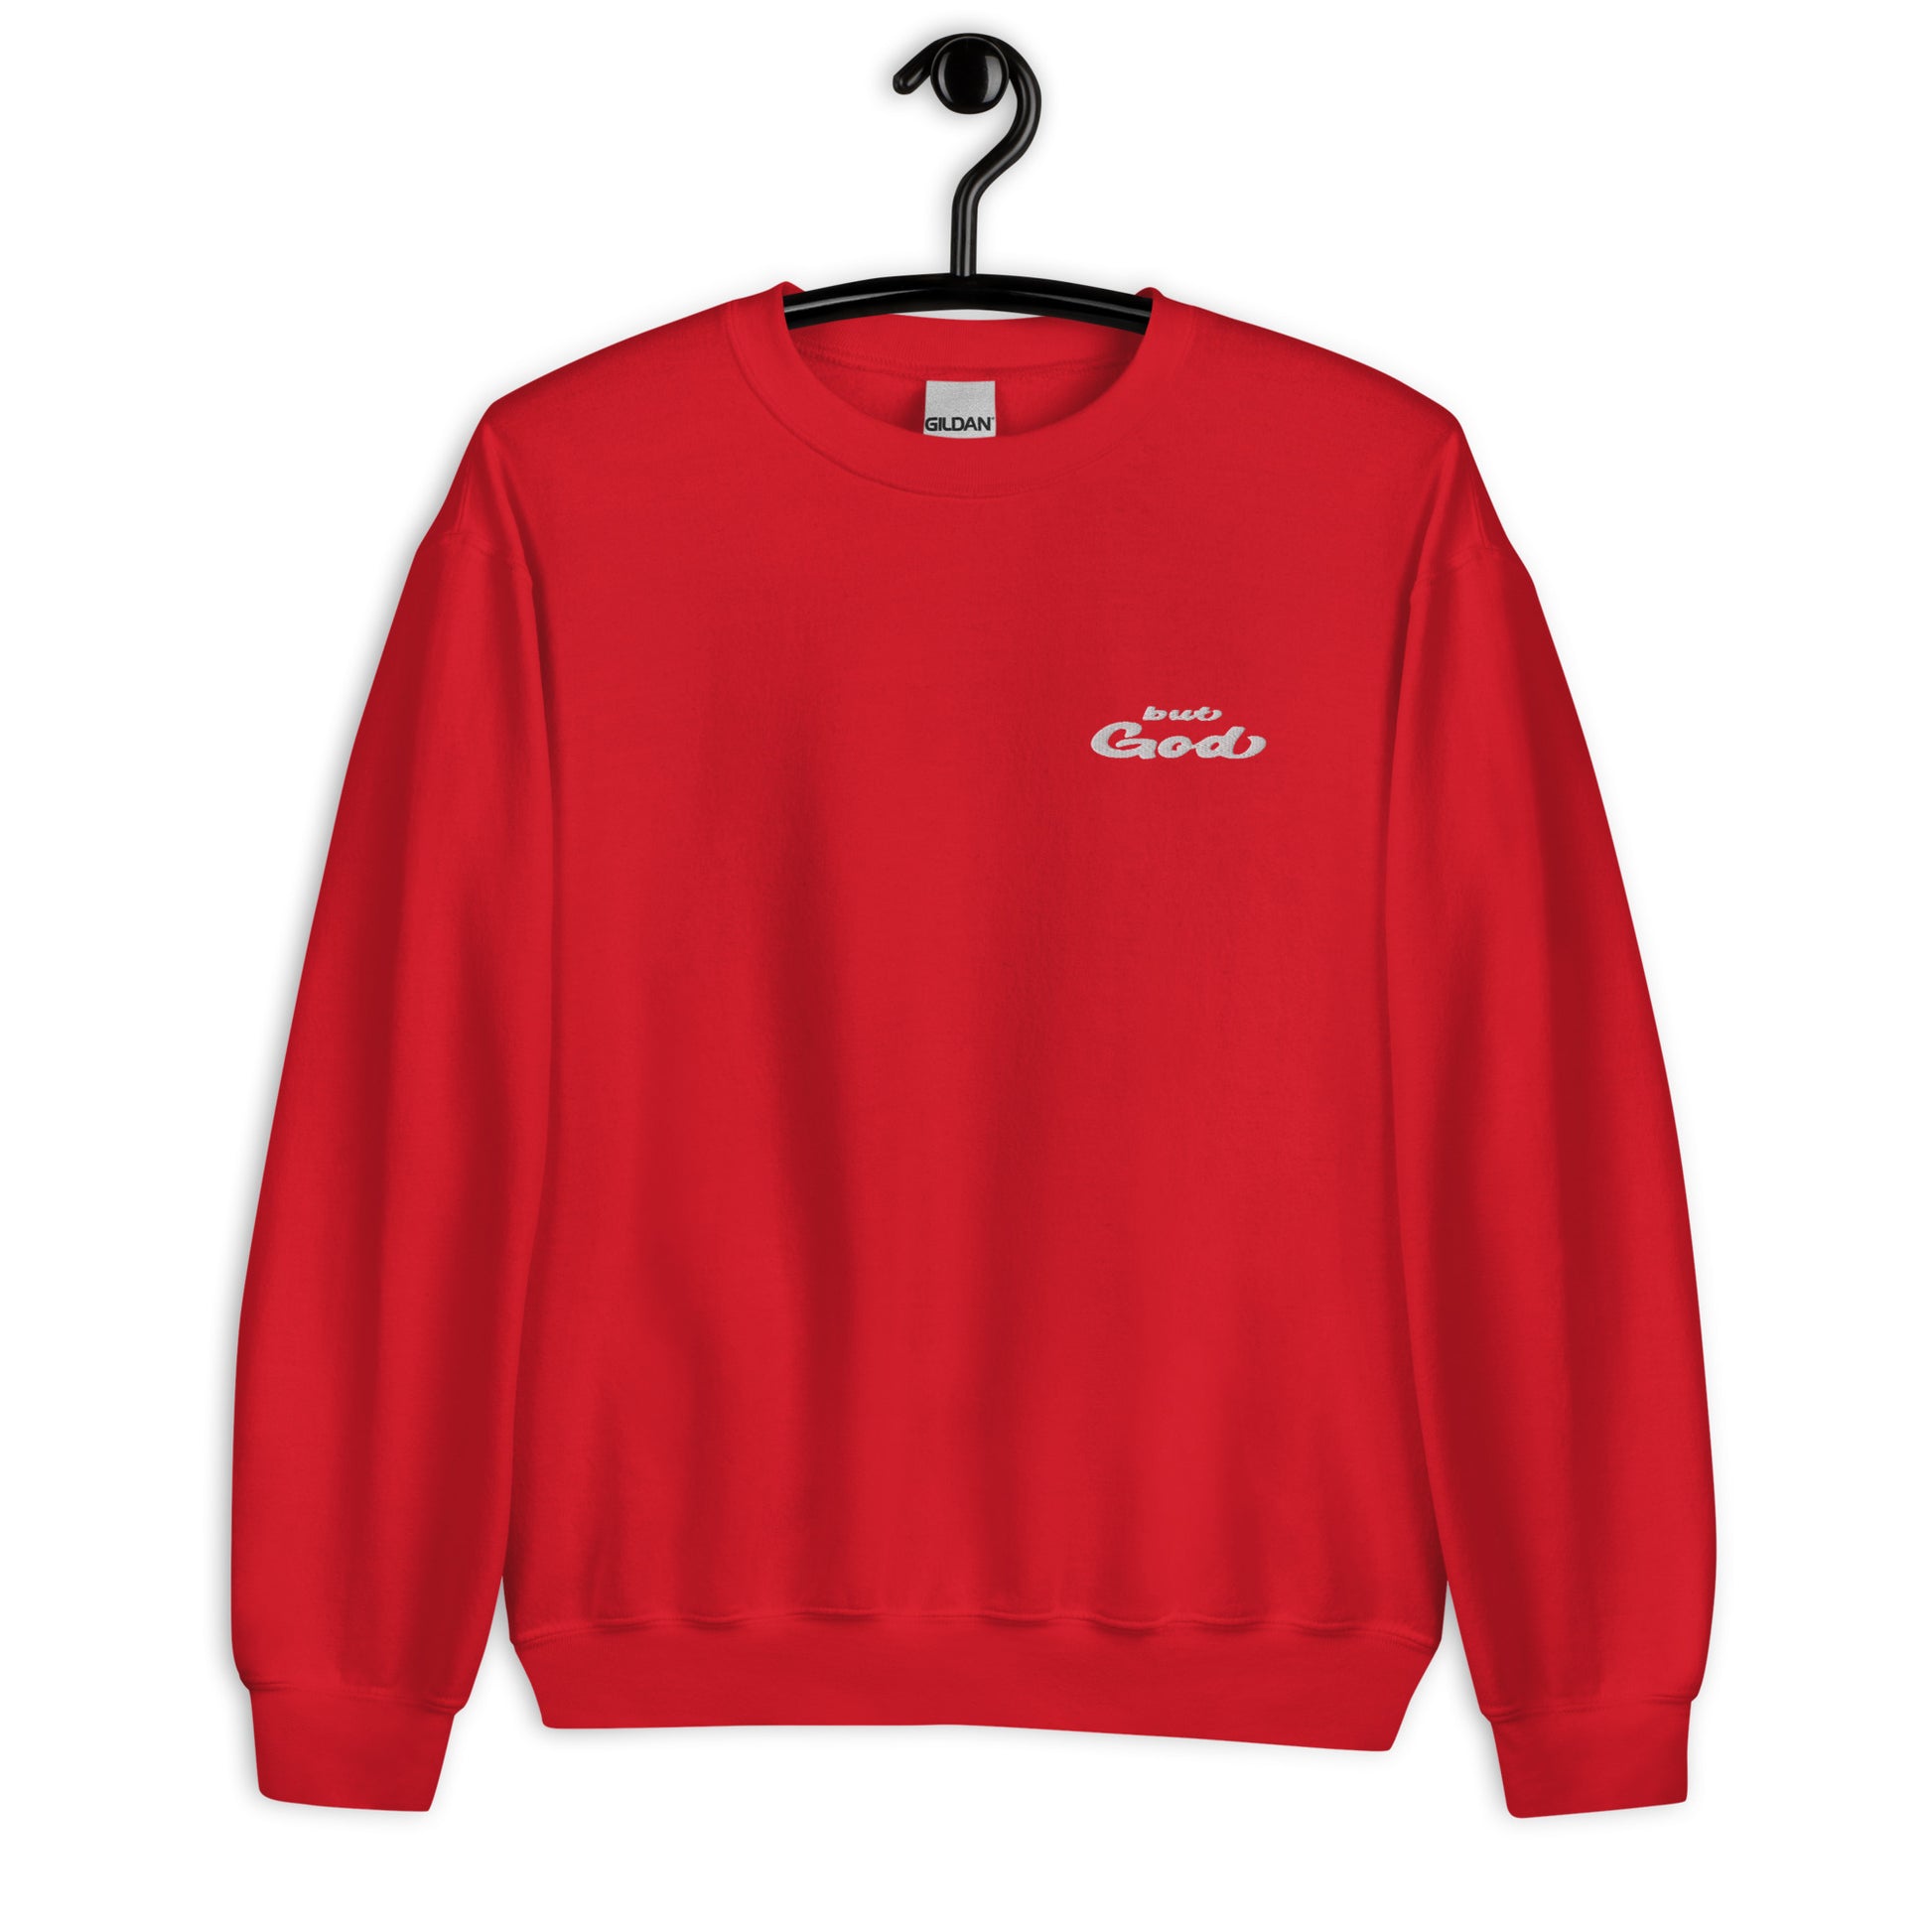 But God Embroidered Unisex Sweatshirt red on hanger